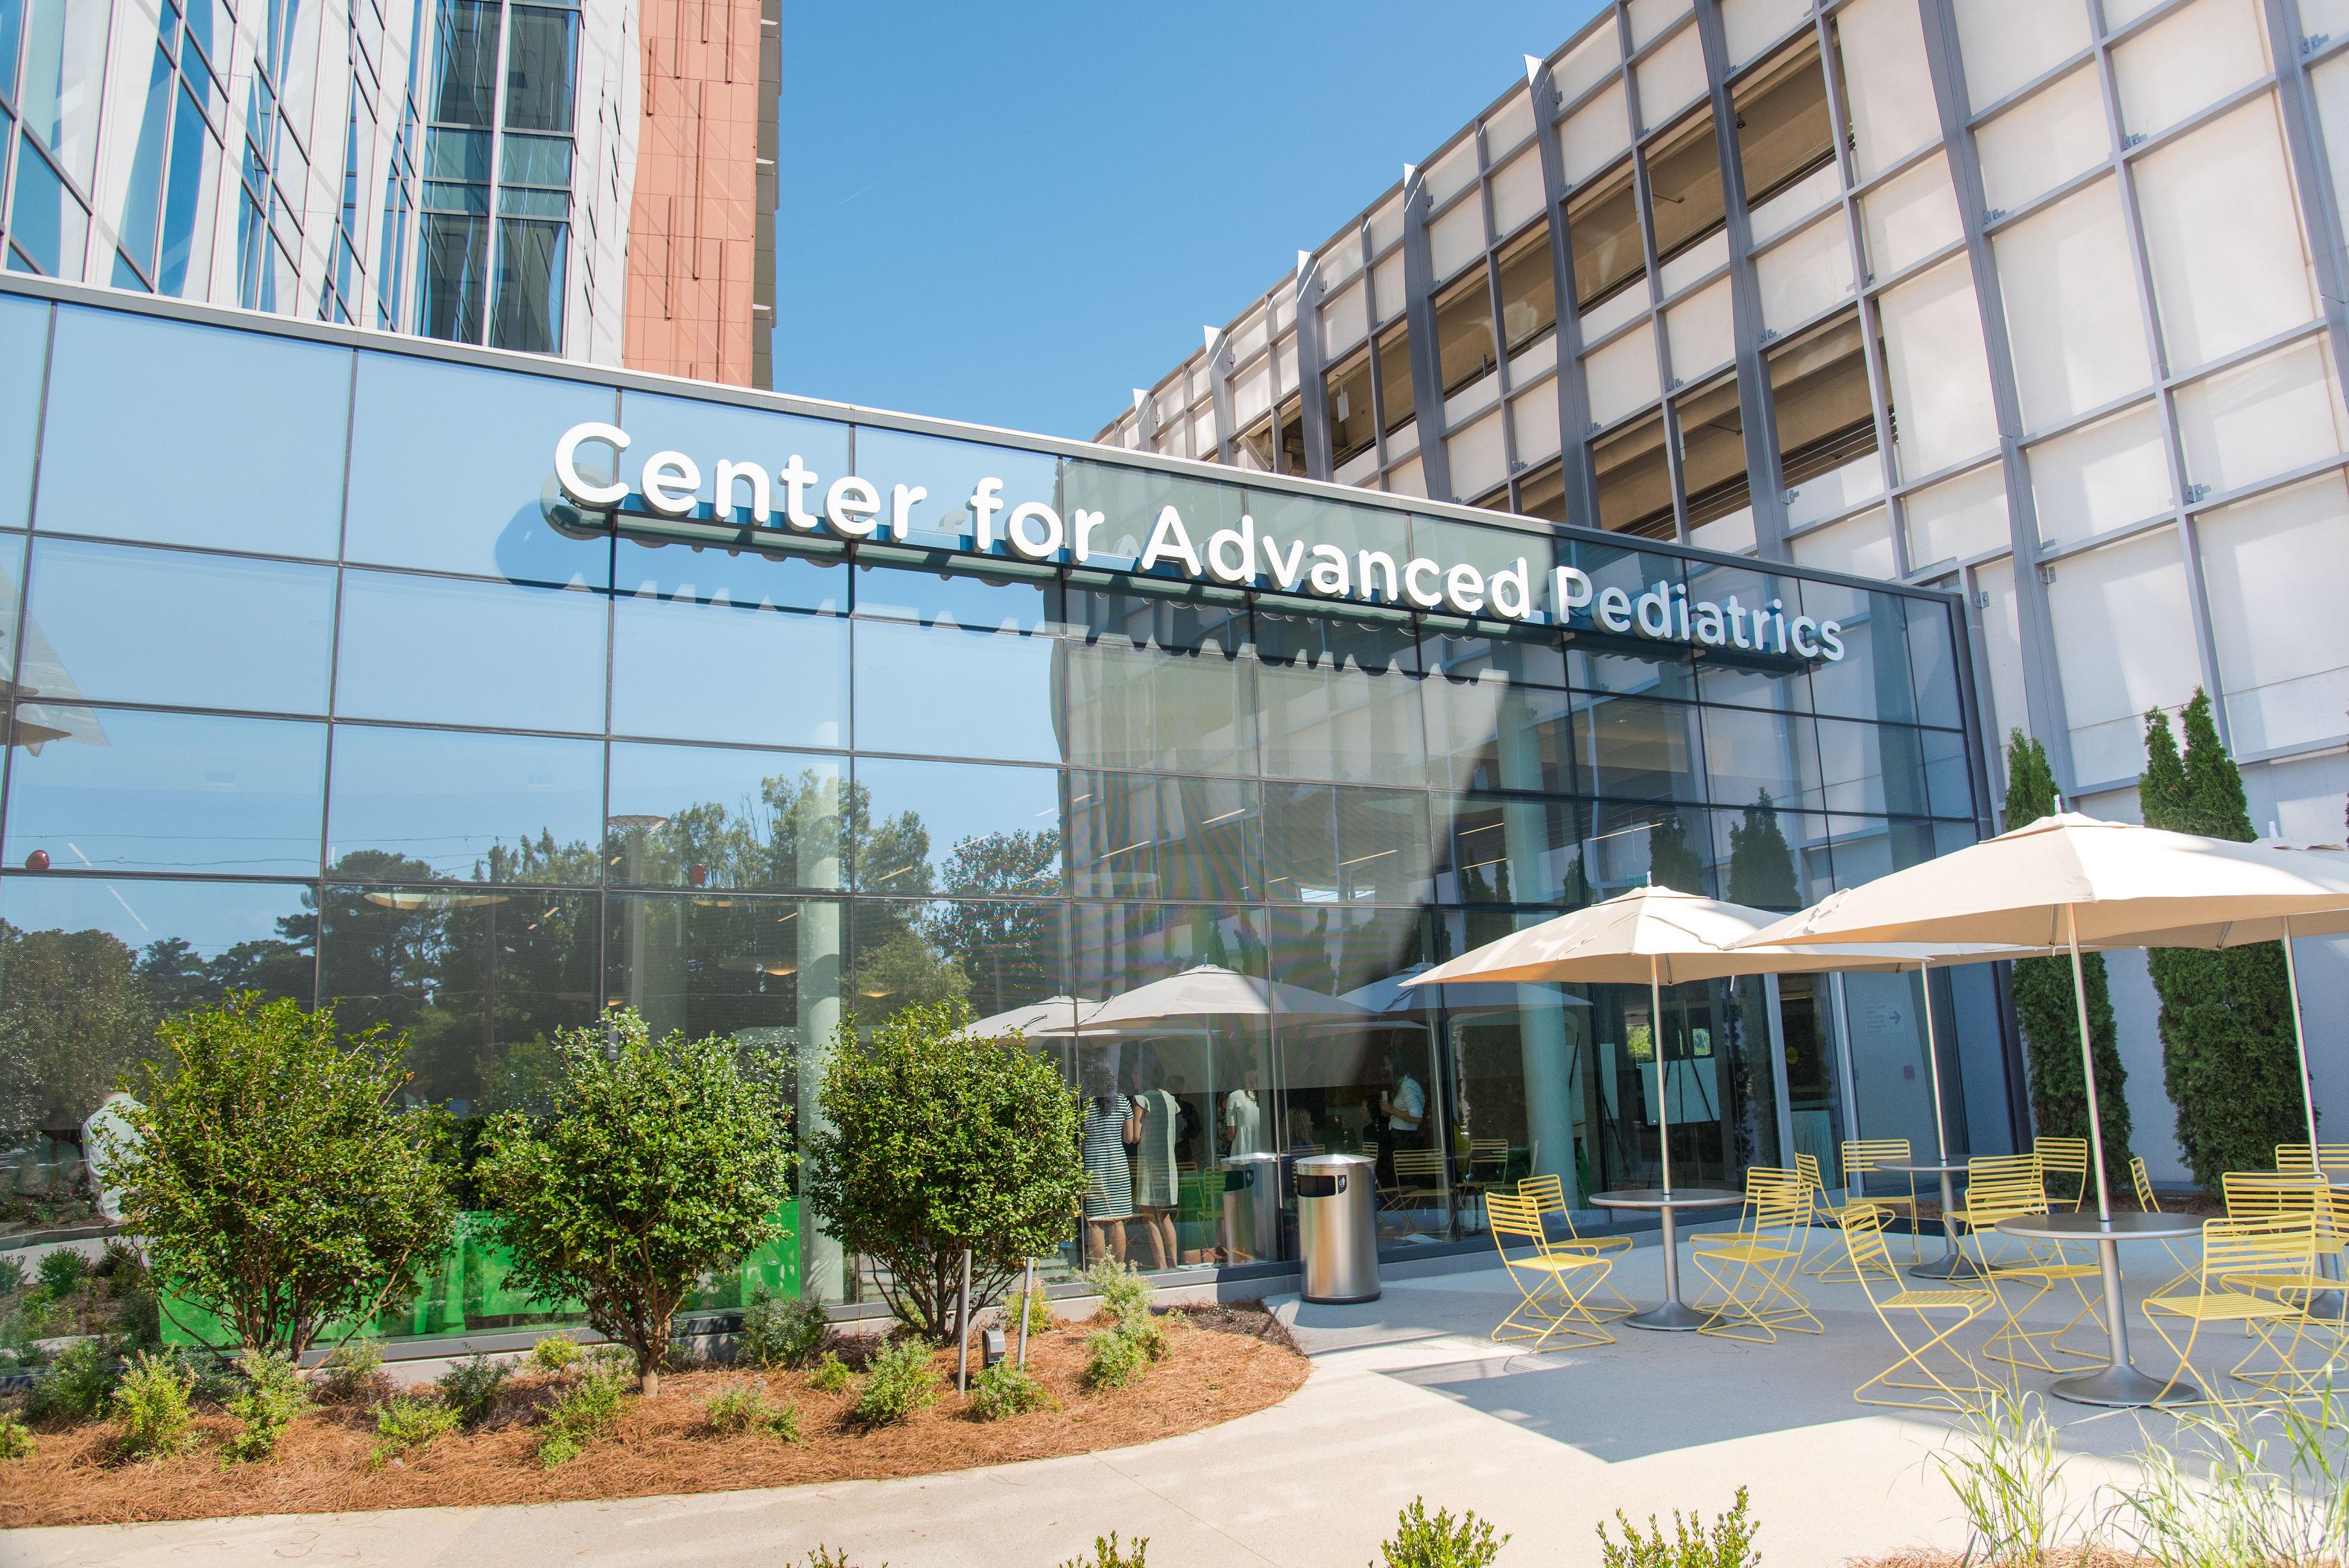 Center for Advanced Pediatrics